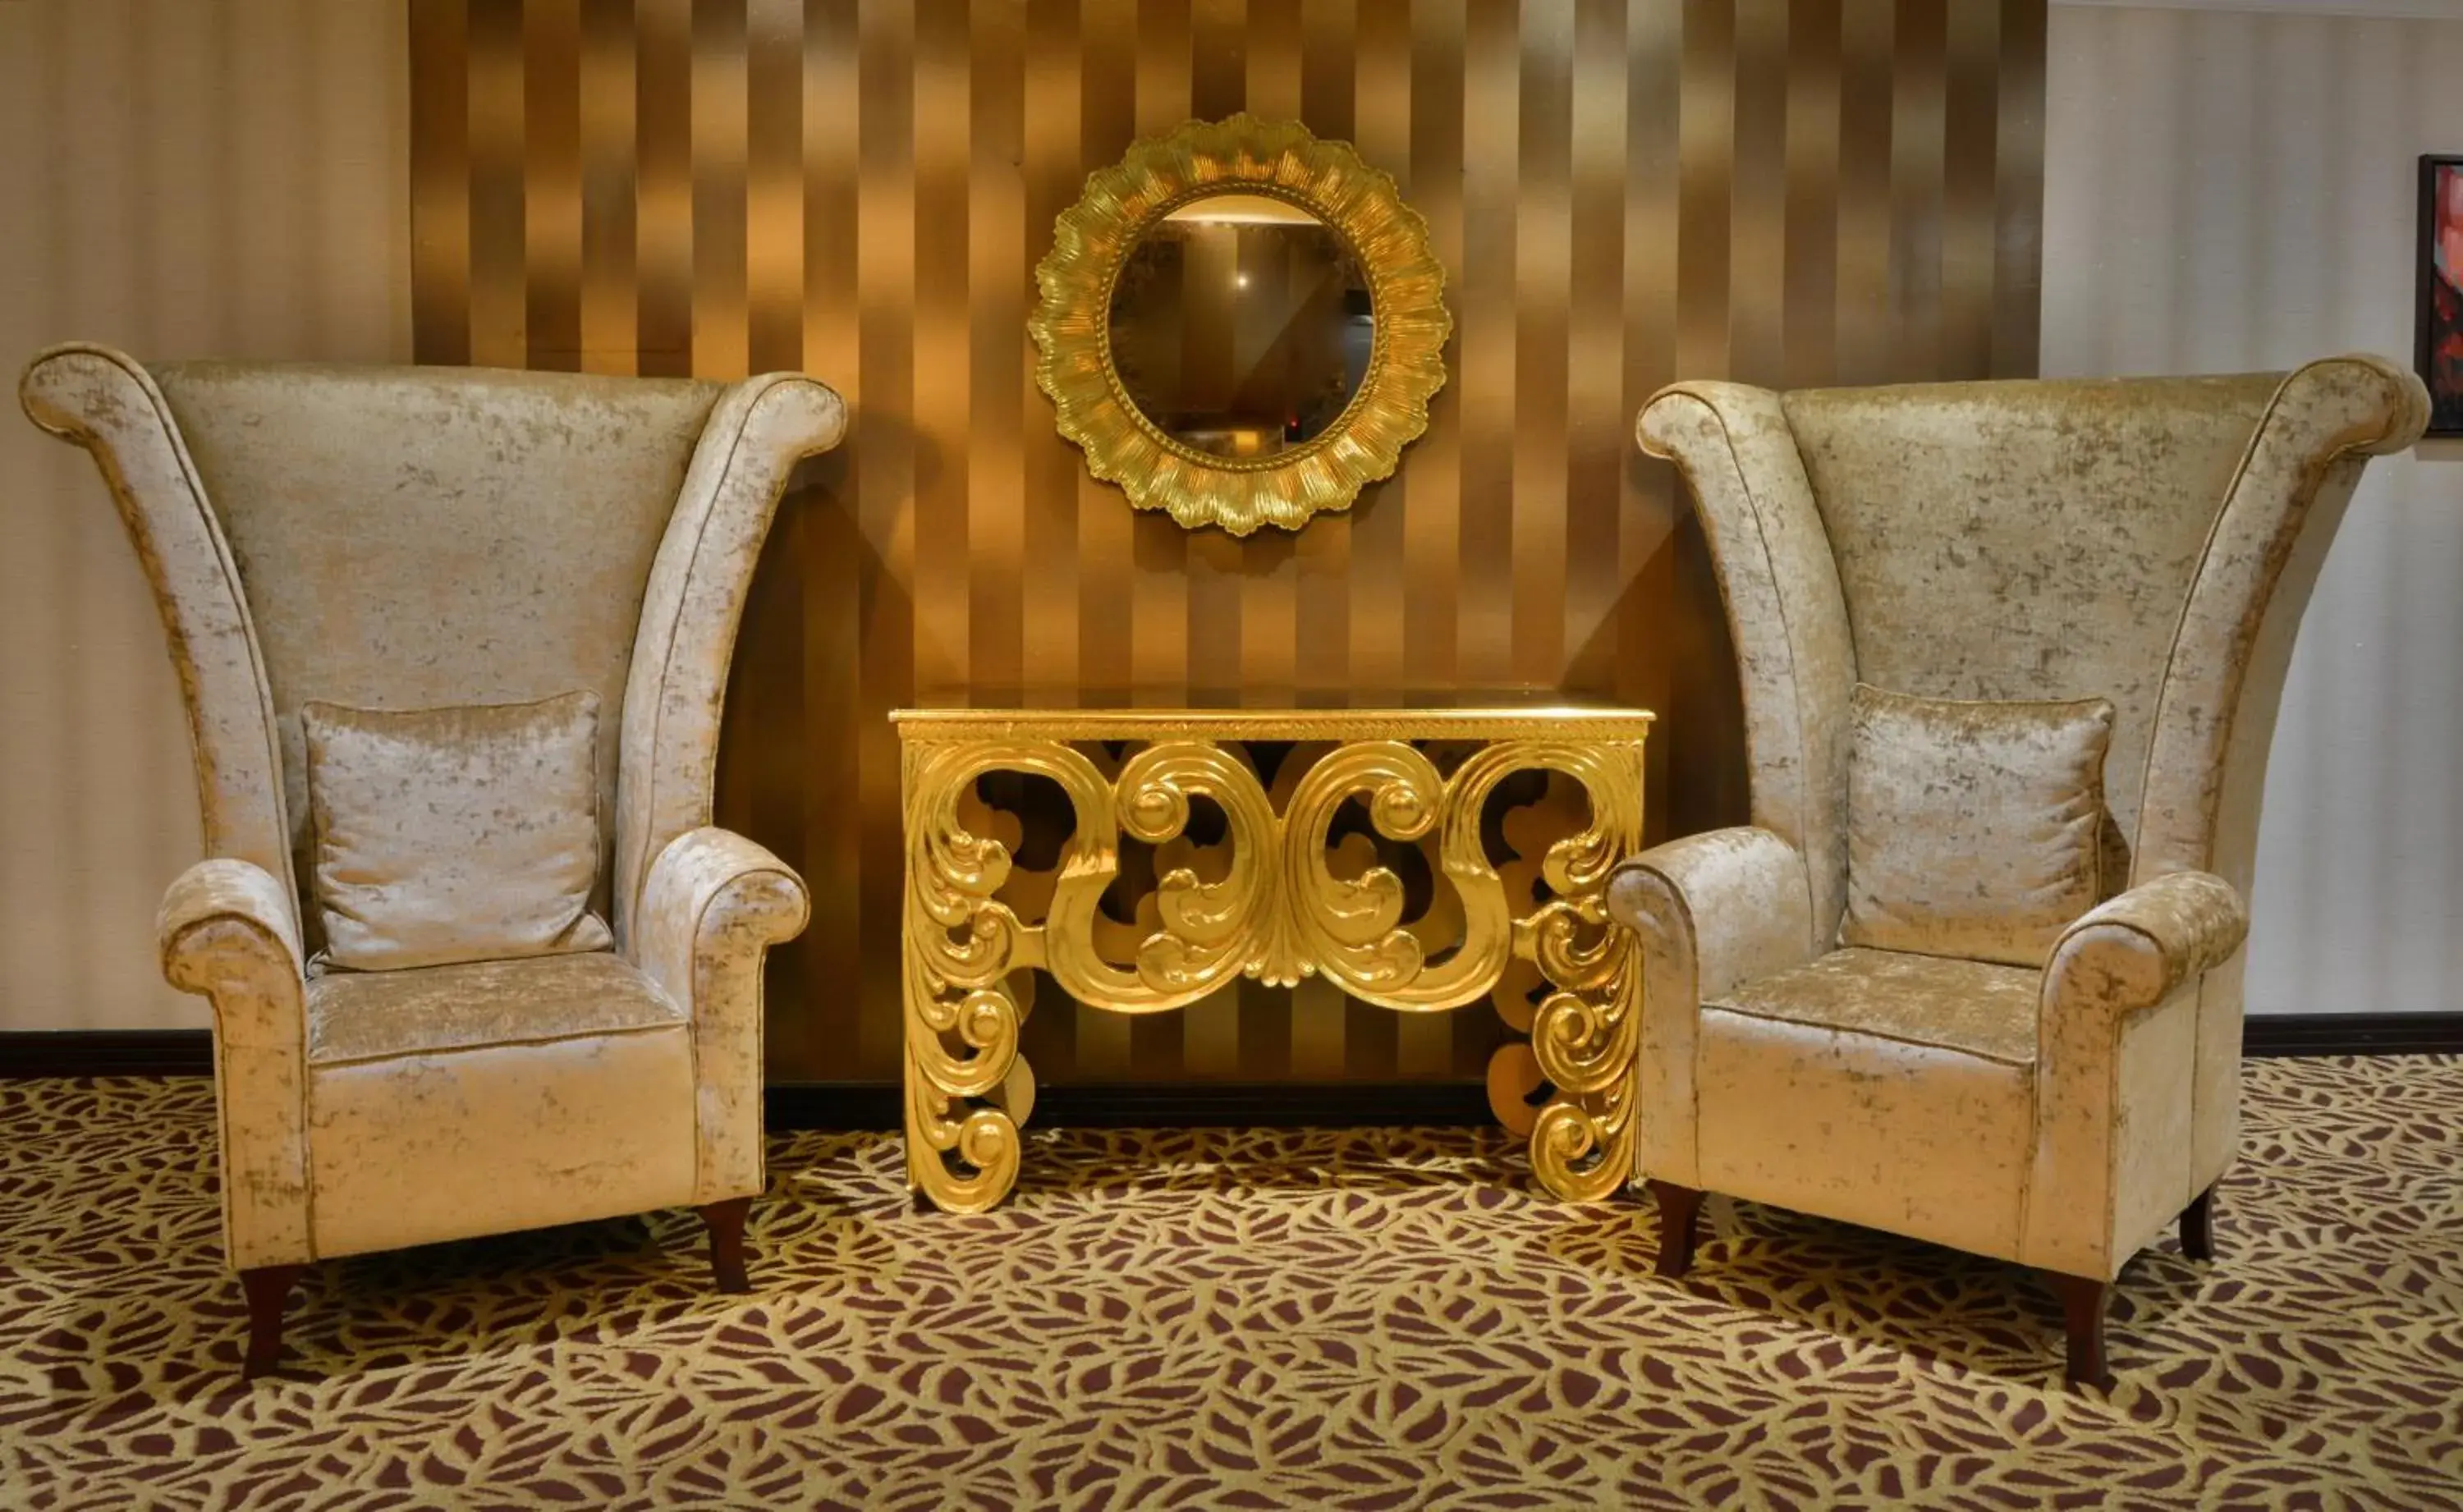 Decorative detail, Seating Area in Golden Ocean Hotel